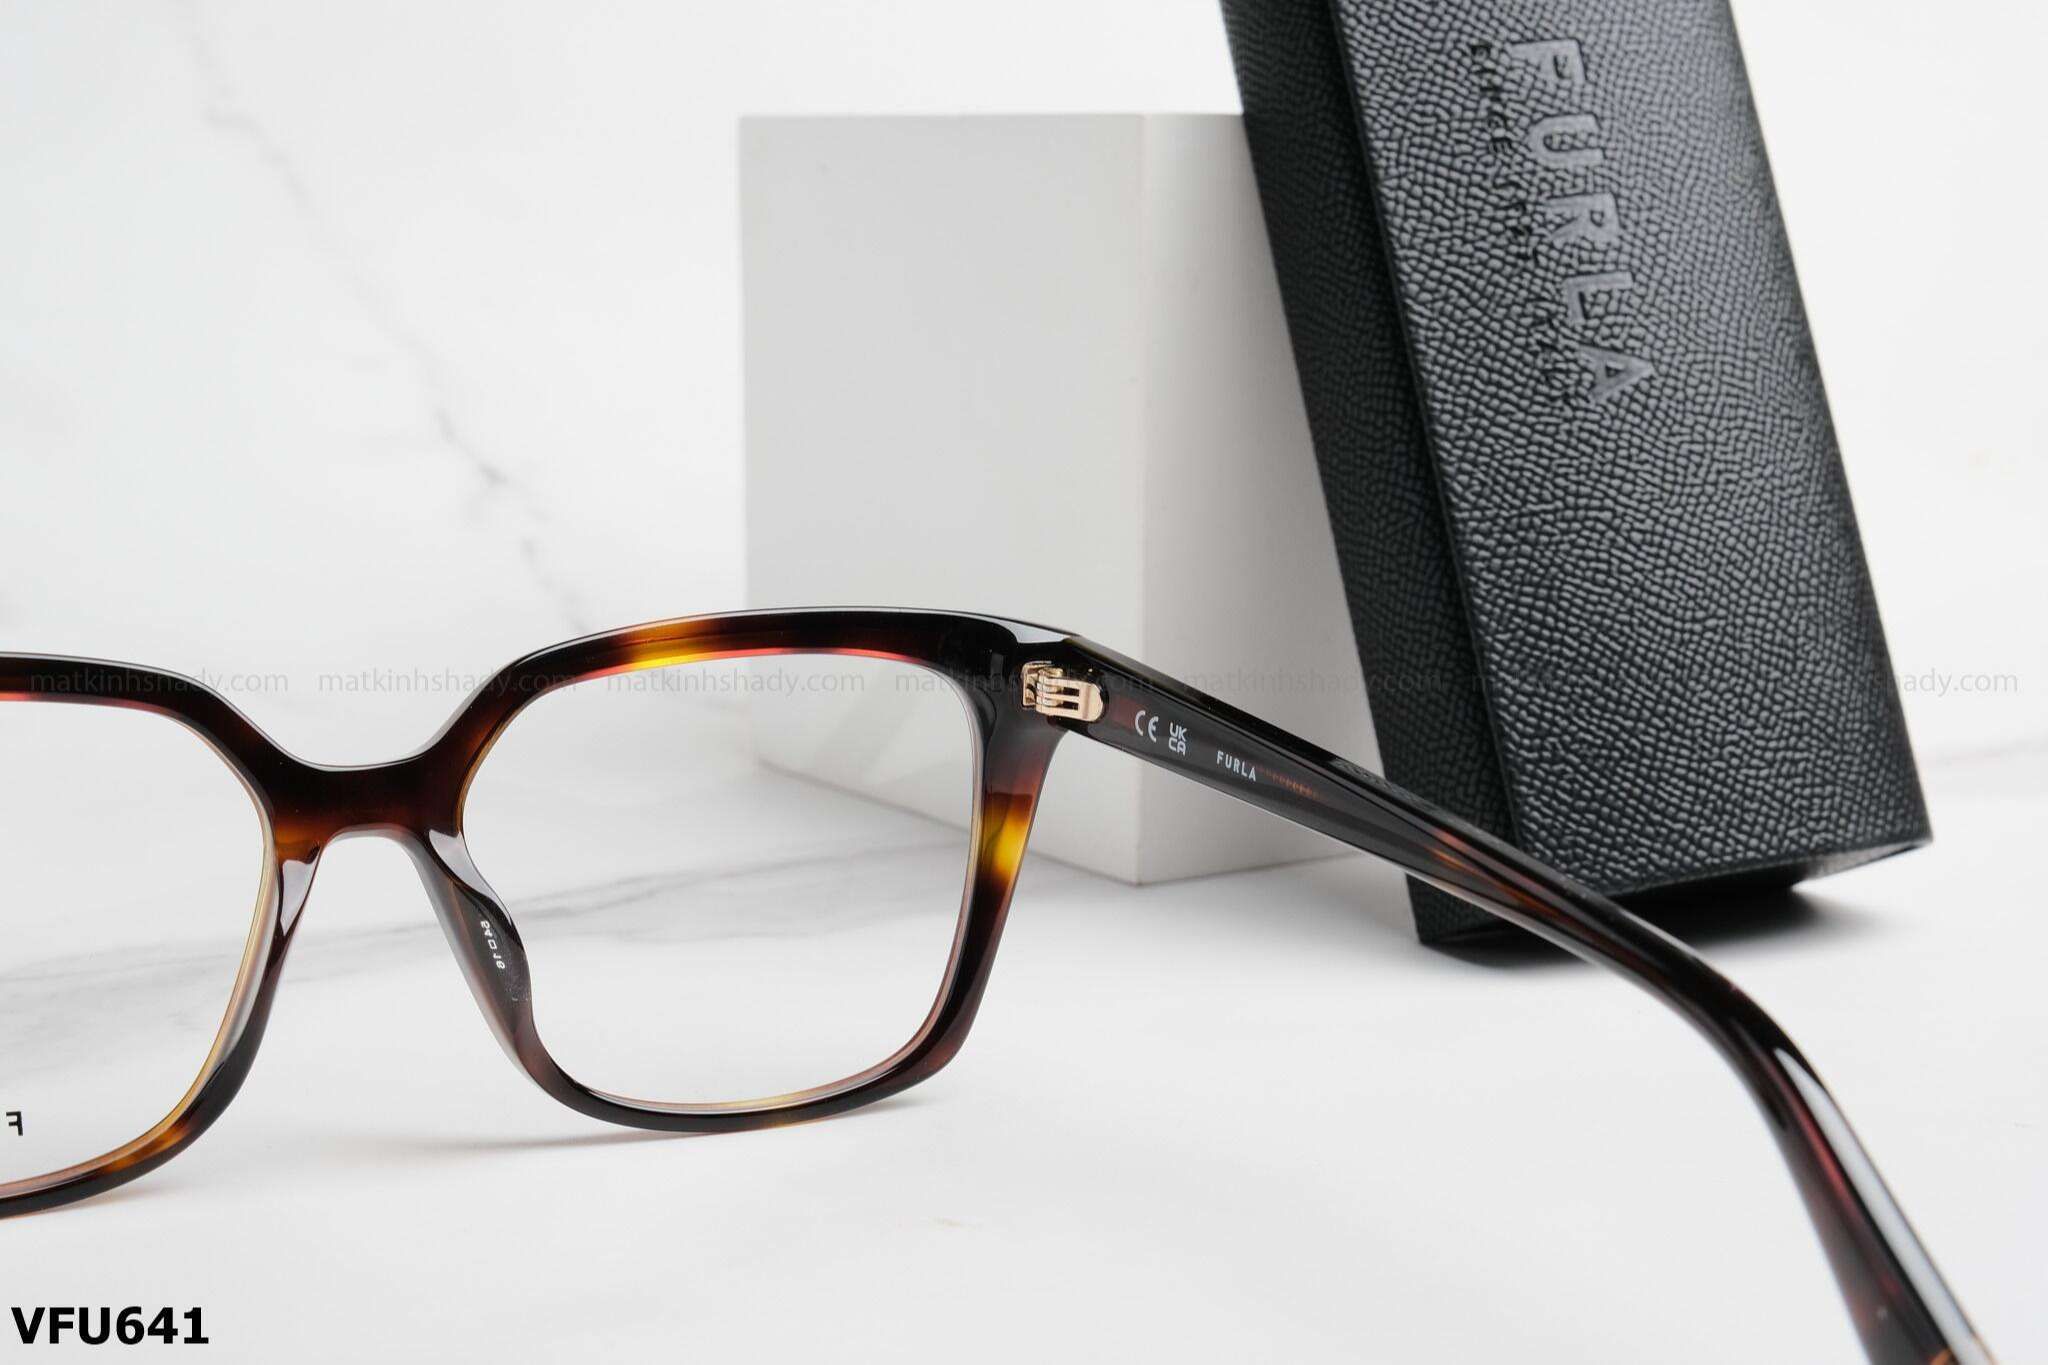  Furla Eyewear - Glasses - VFU641 